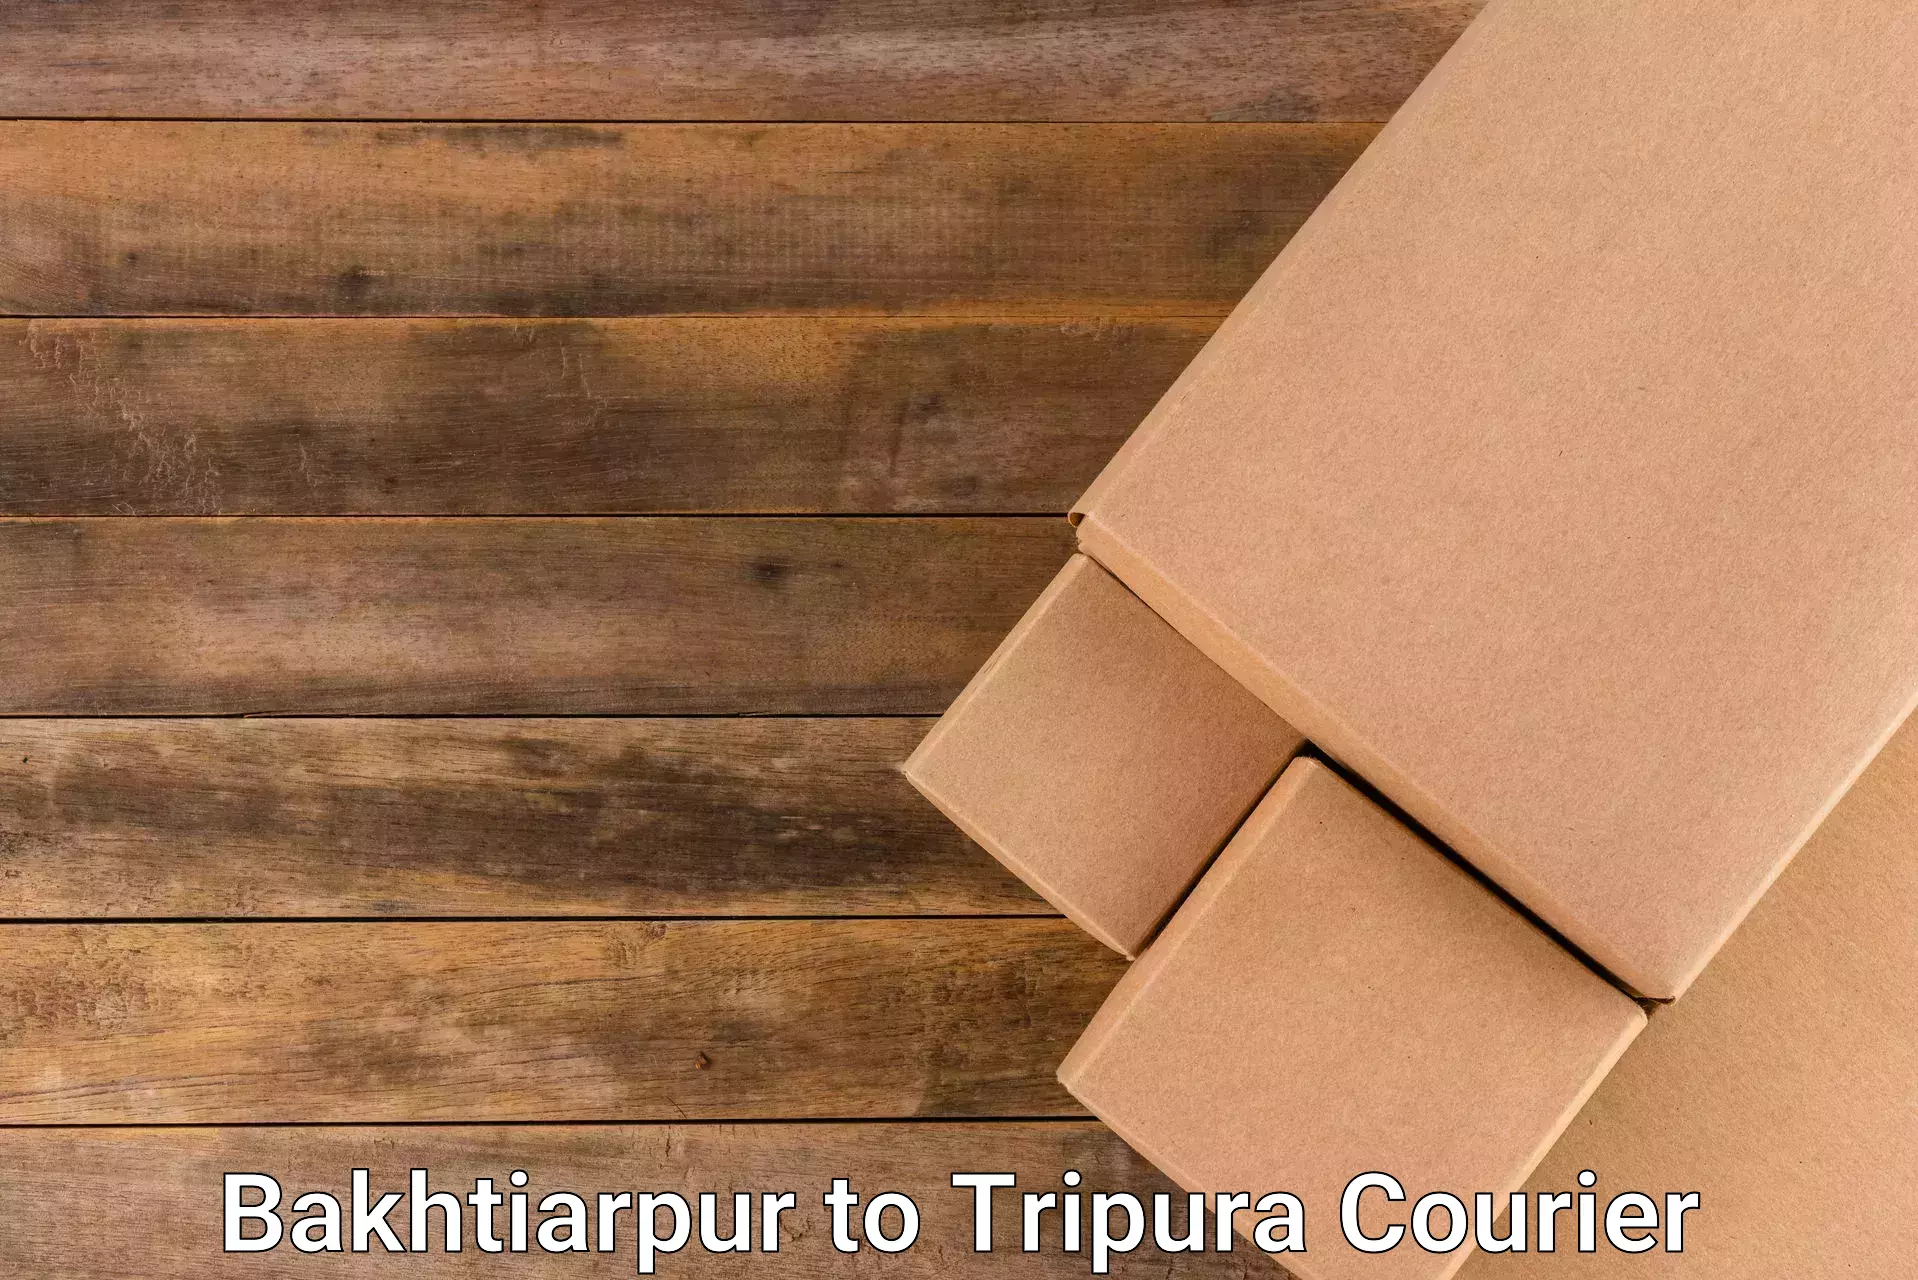 Advanced shipping technology Bakhtiarpur to Amarpur